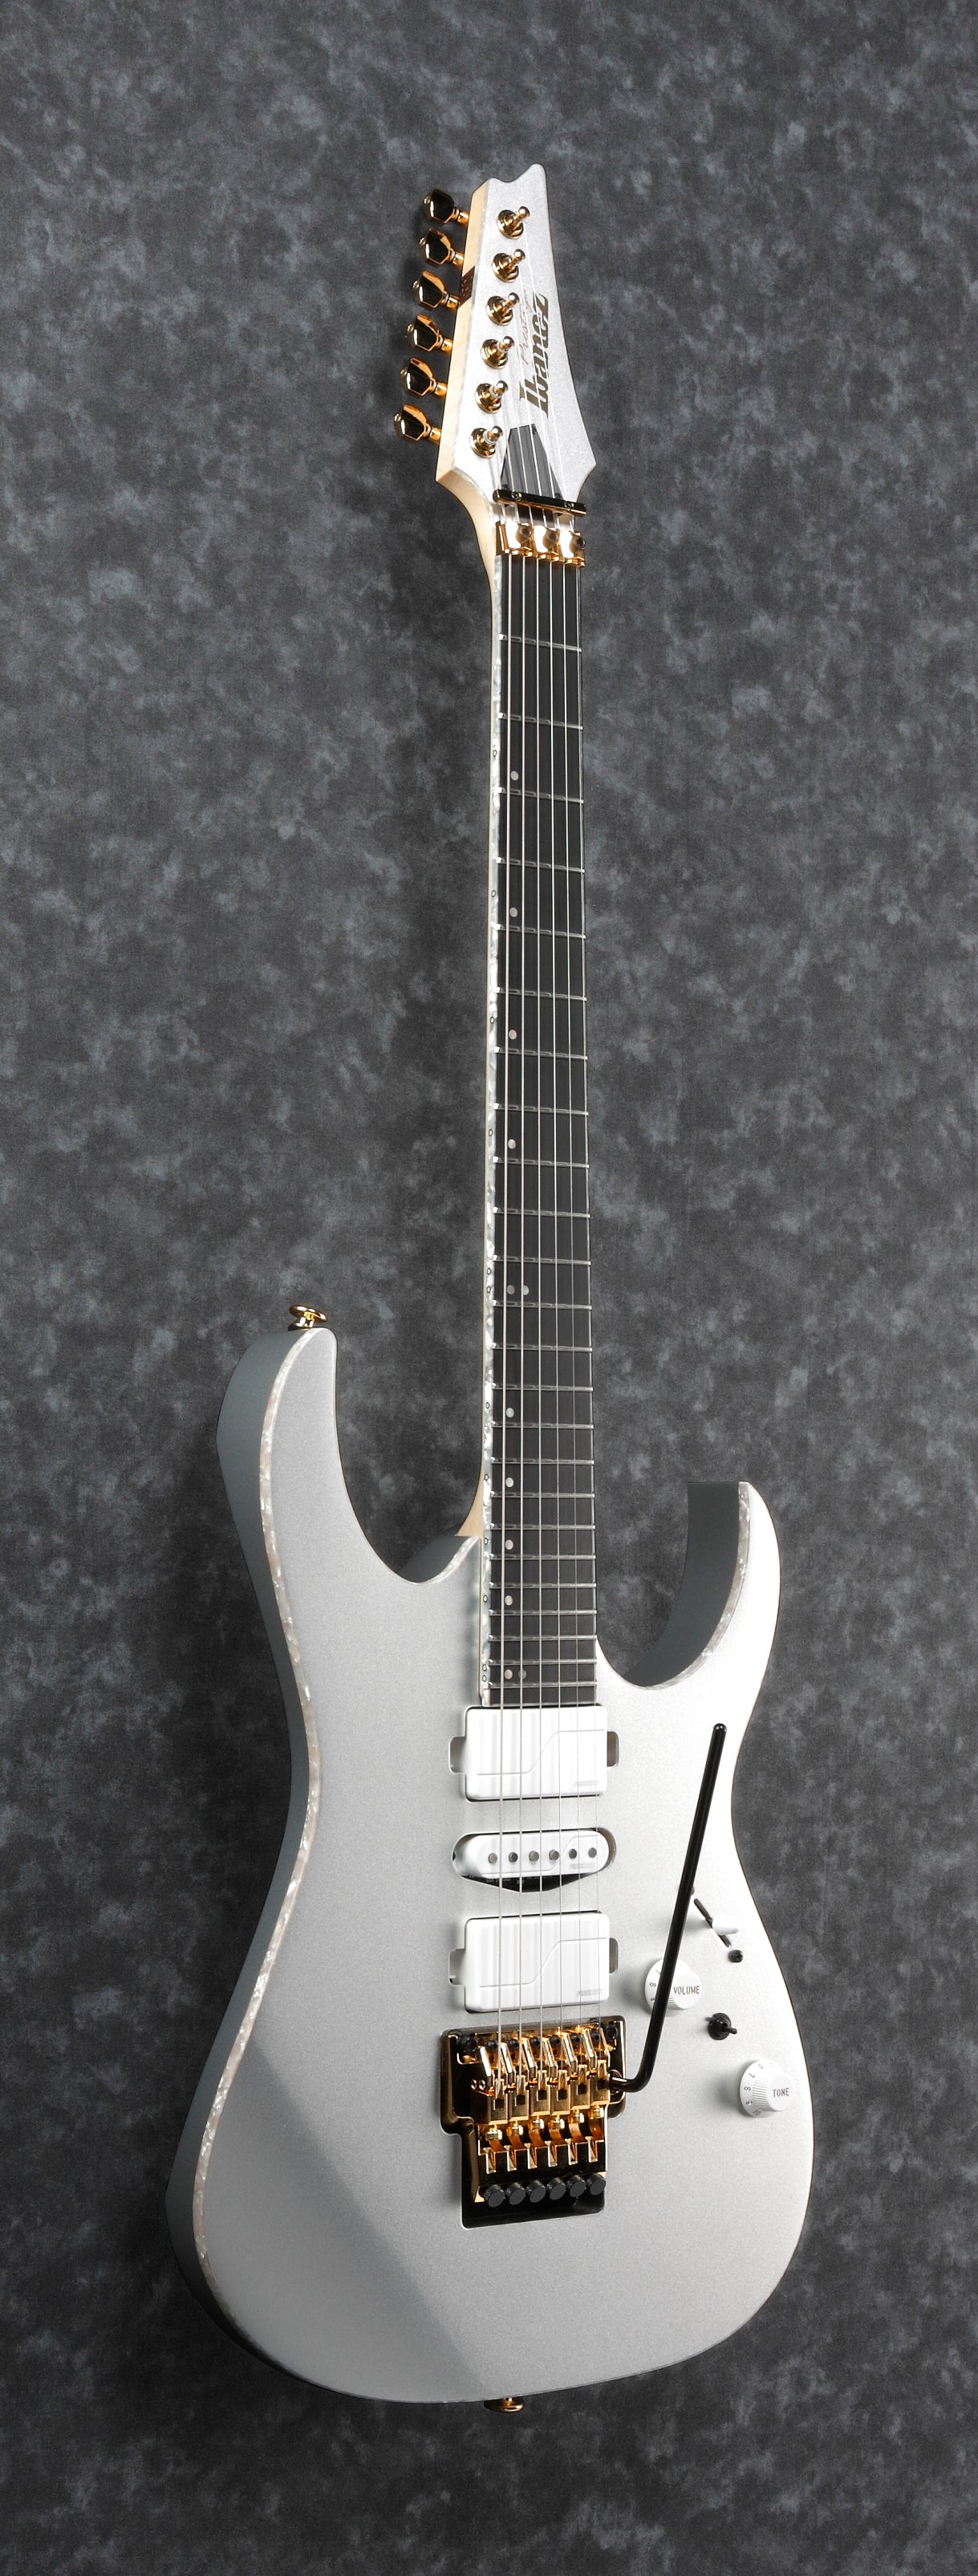 Ibanez Prestige RG5170GSVF (Silver Flat) Japan Made Electric Guitar 電結他